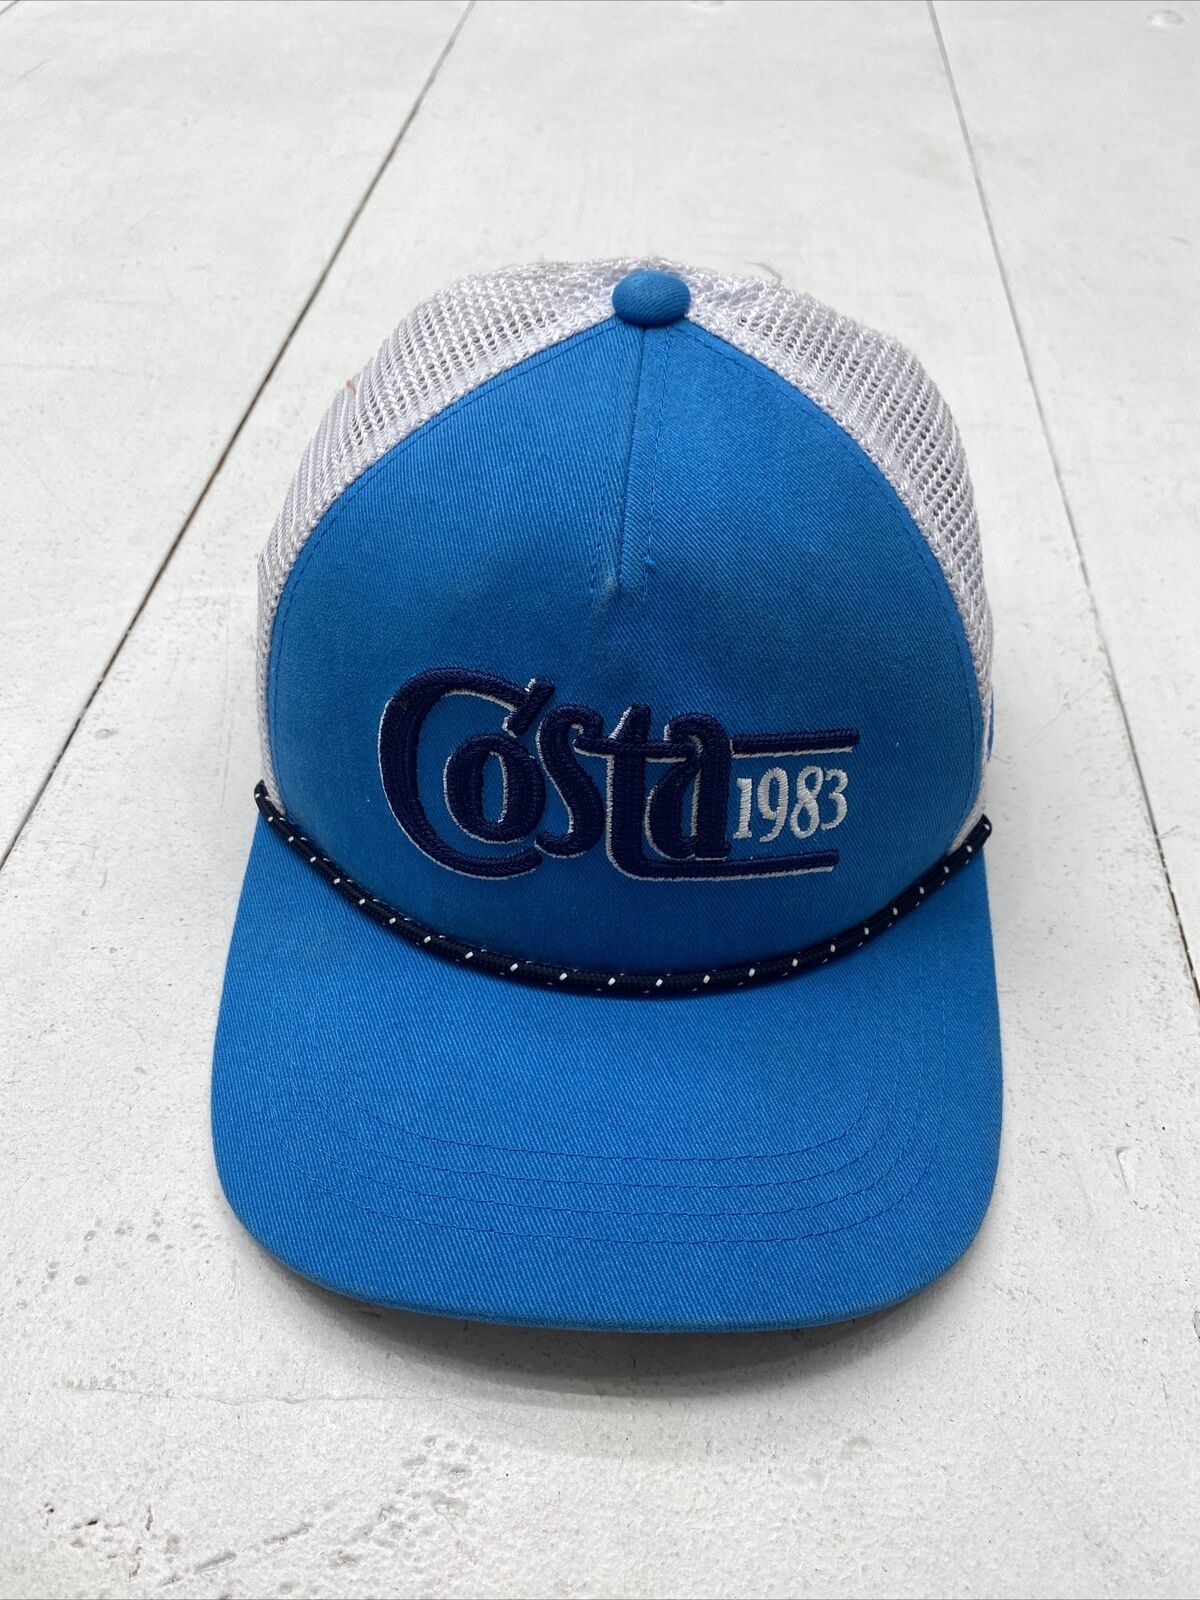 Costa Del Mar Costa 1983 Trucker Traditions Hat Cap Snapback Mesh Blue  White New